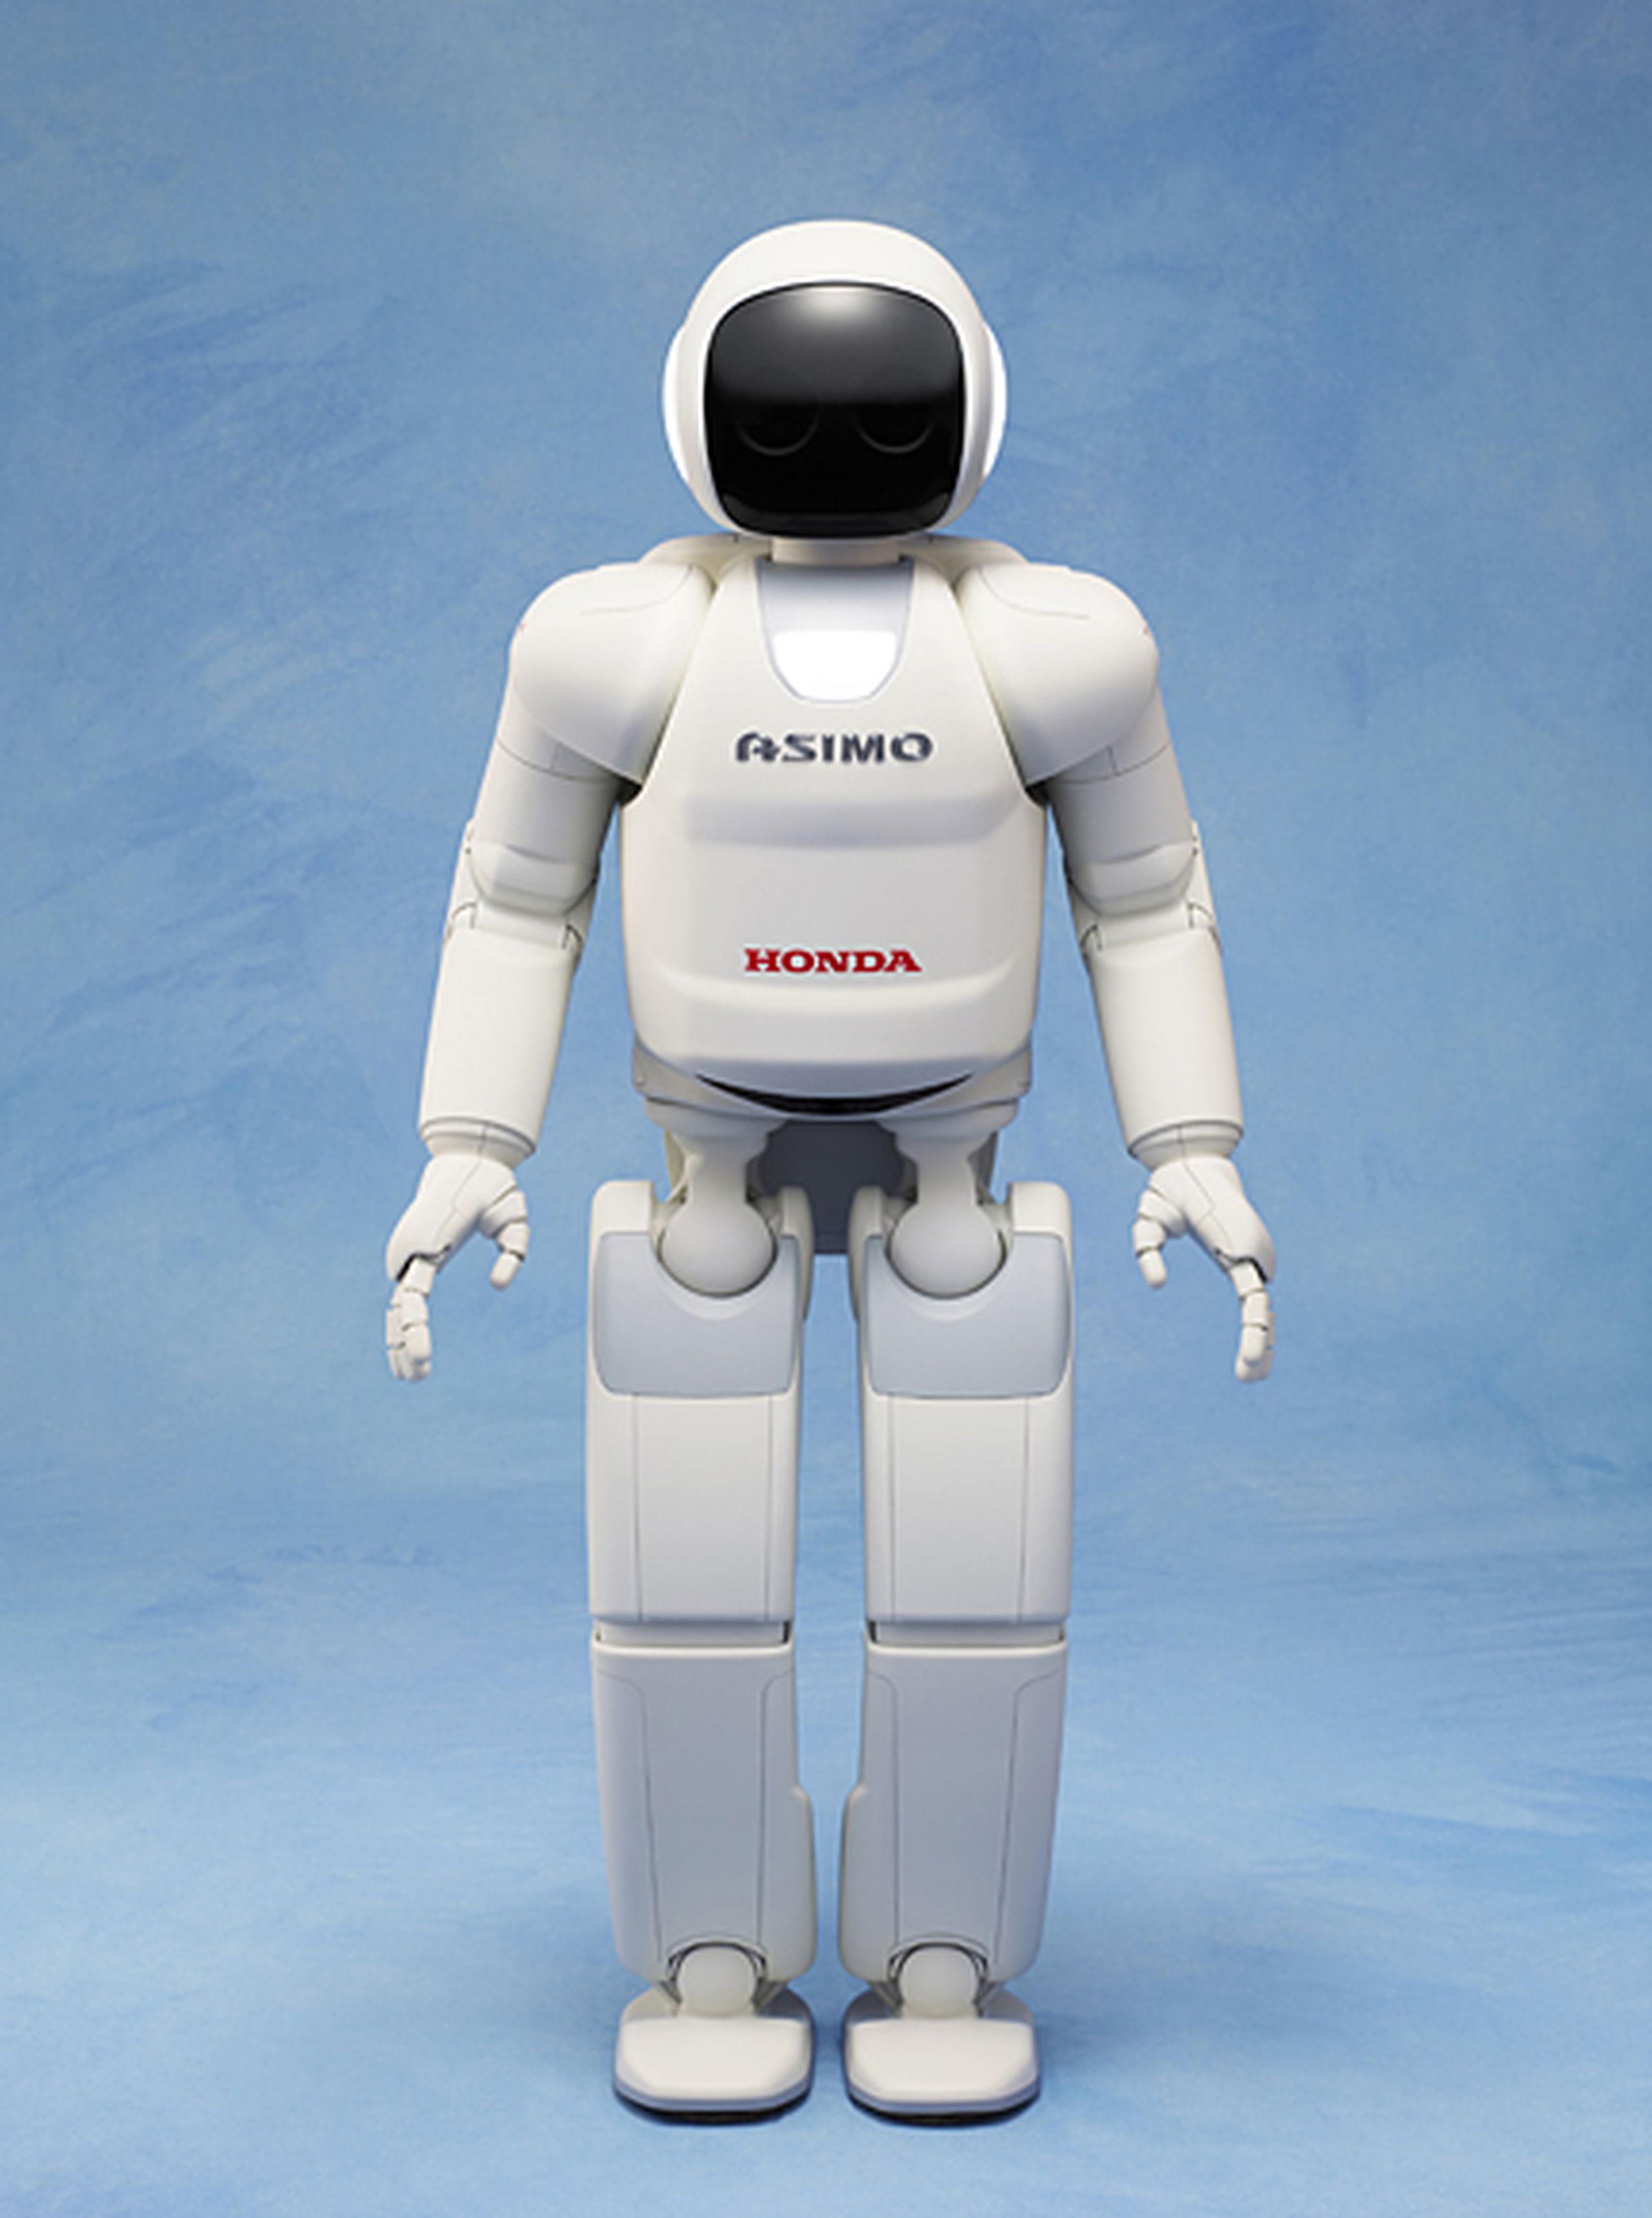 Honda's new Asimo Robot pictures